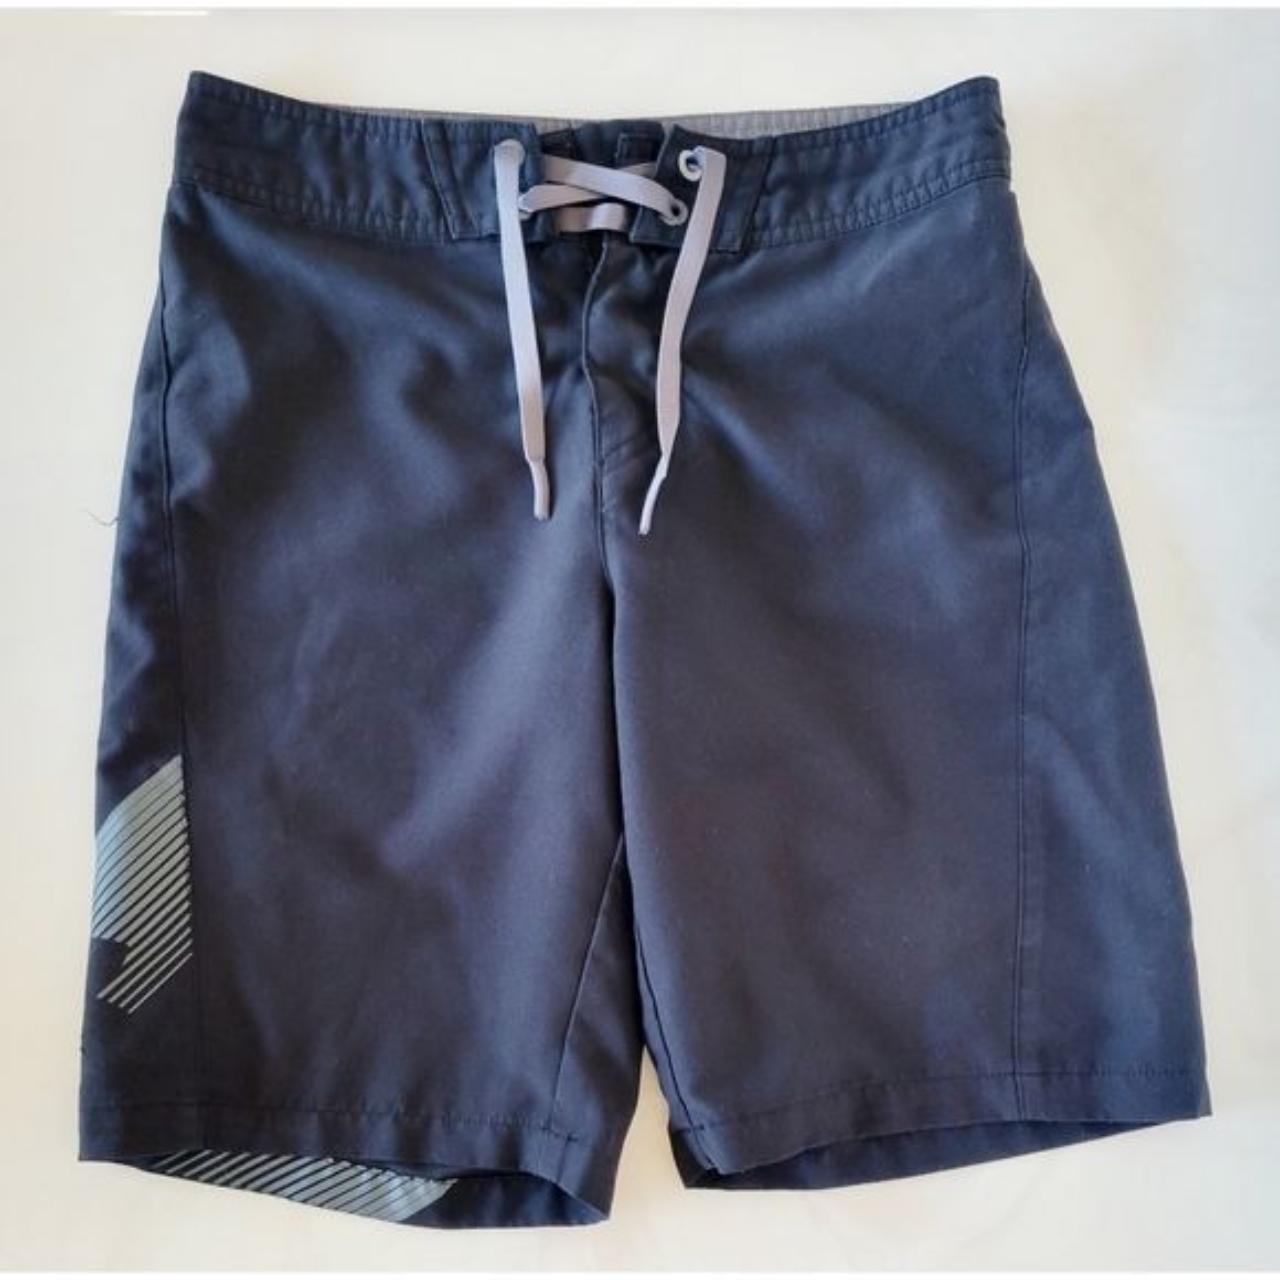 Under Armour Black and Grey Swim-briefs-shorts | Depop